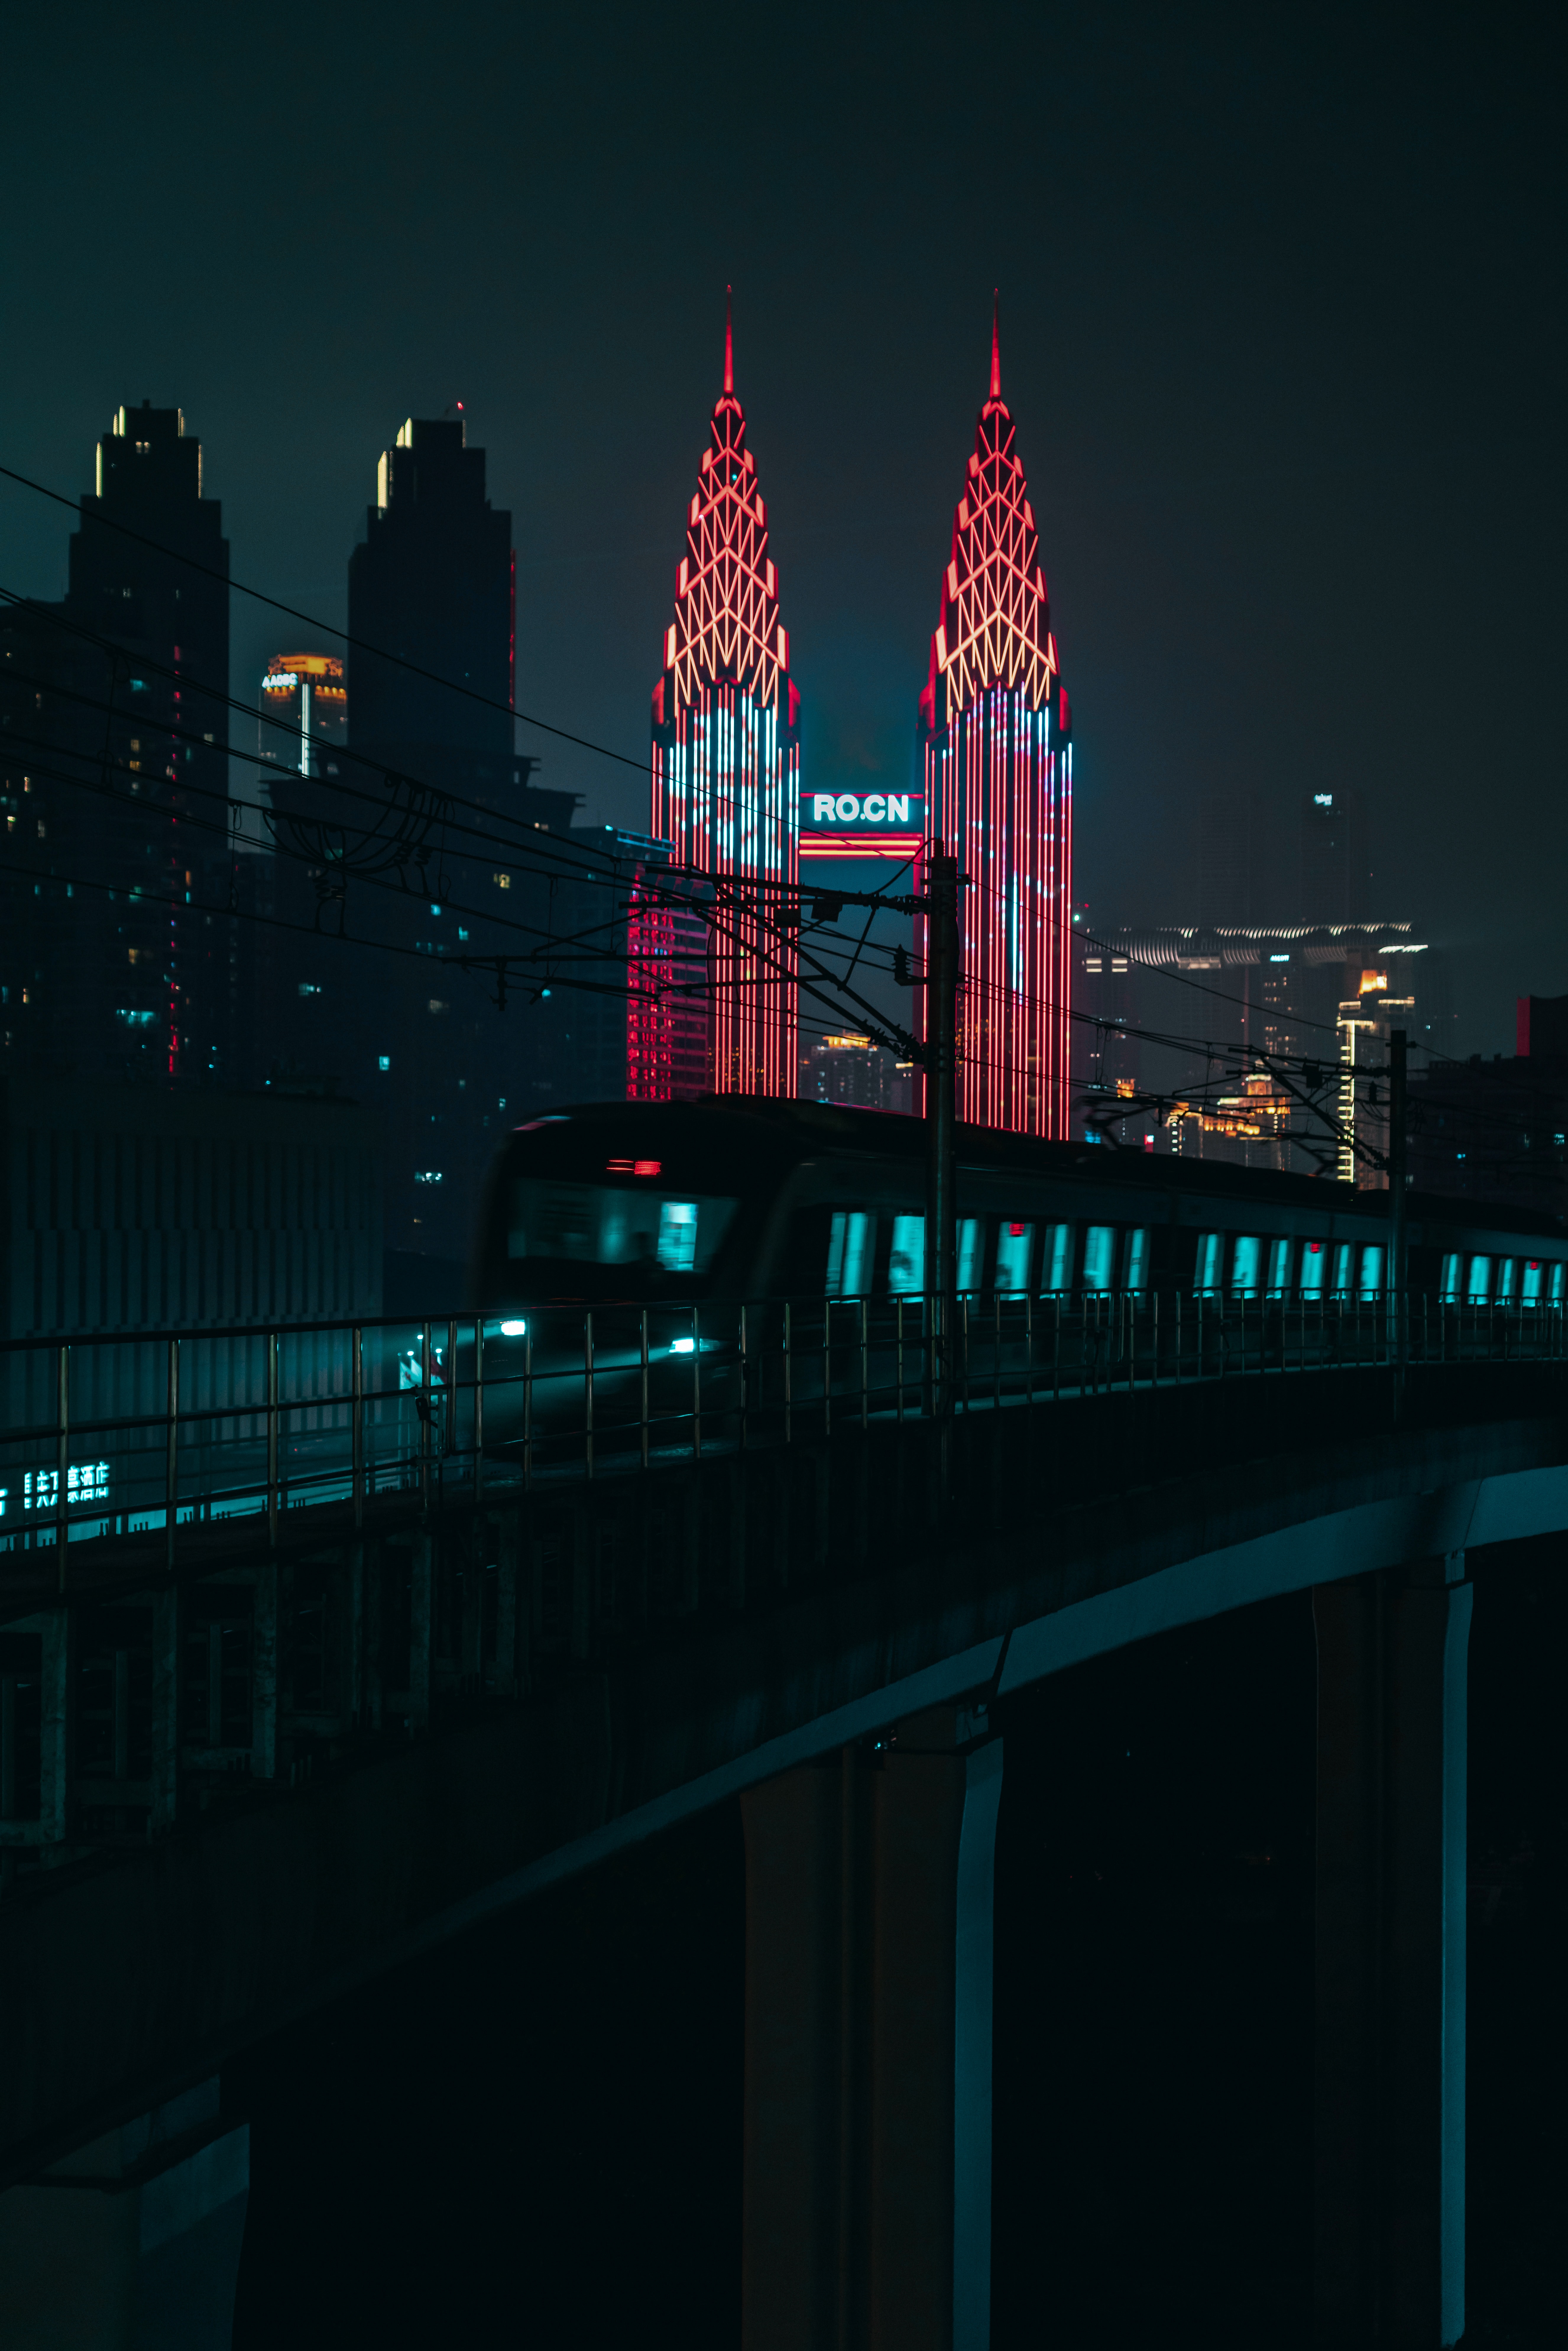 night city, train, cities, architecture, building, backlight, illumination 32K